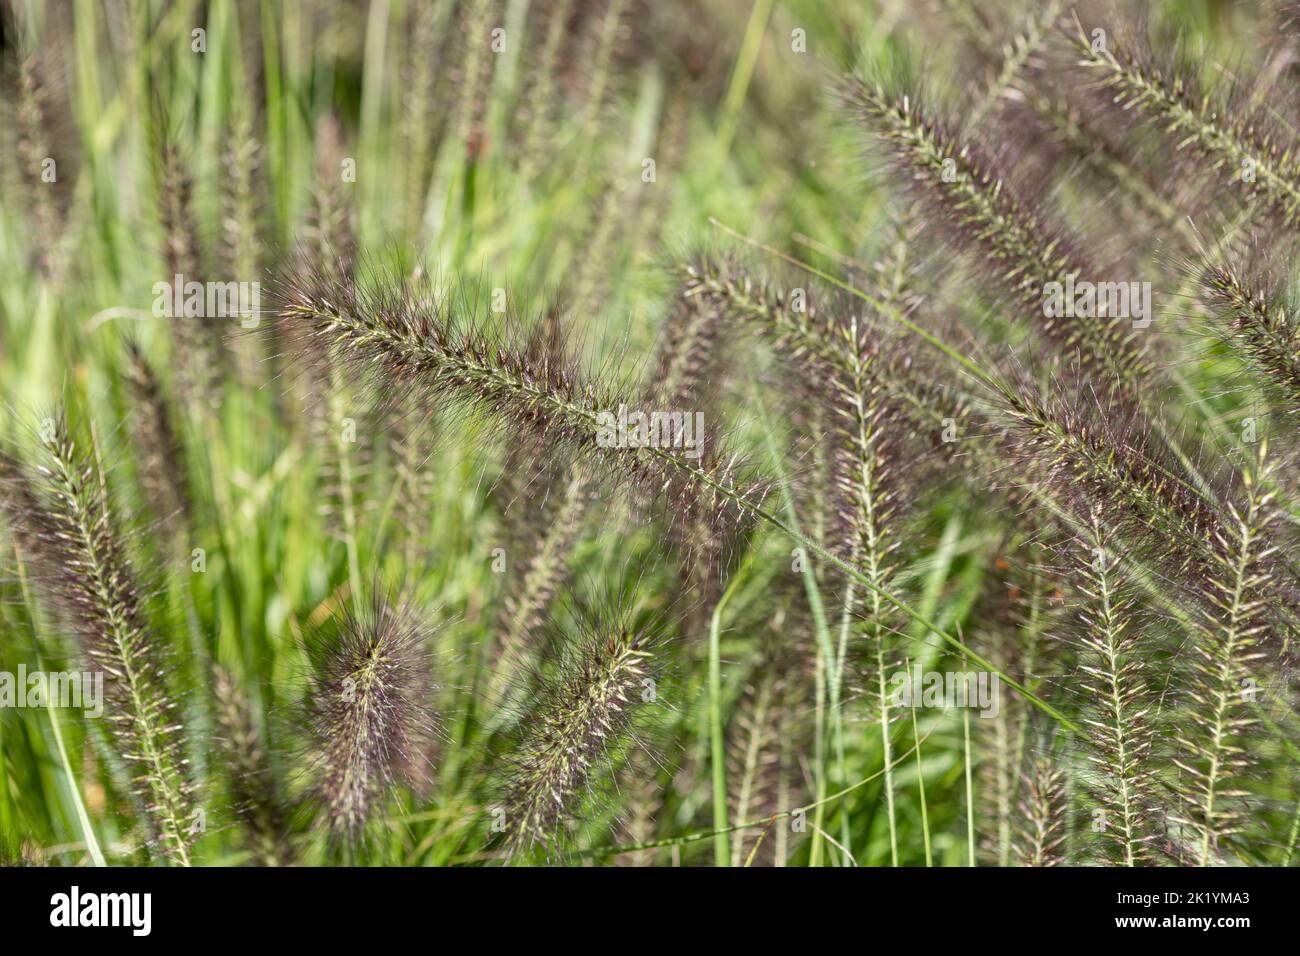 Pennisetum alopecuroides 'Dark Desire' (Chinese fountain grass) in flower. Ornamental grass with dark purple-black flowerheads in late summer Stock Photo